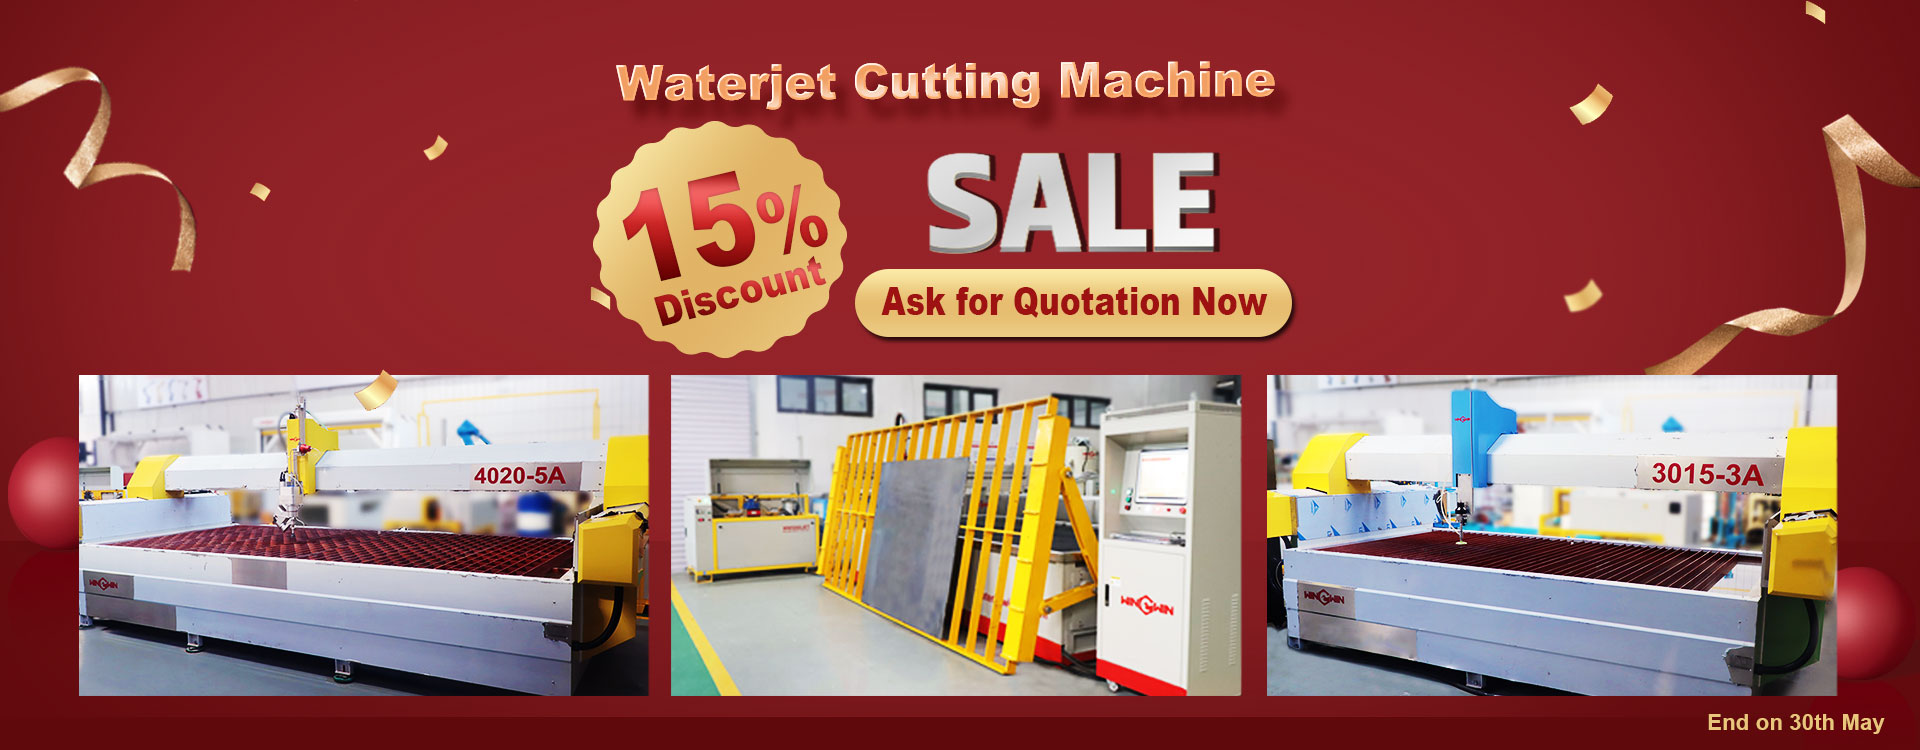 Waterjet cutting machines